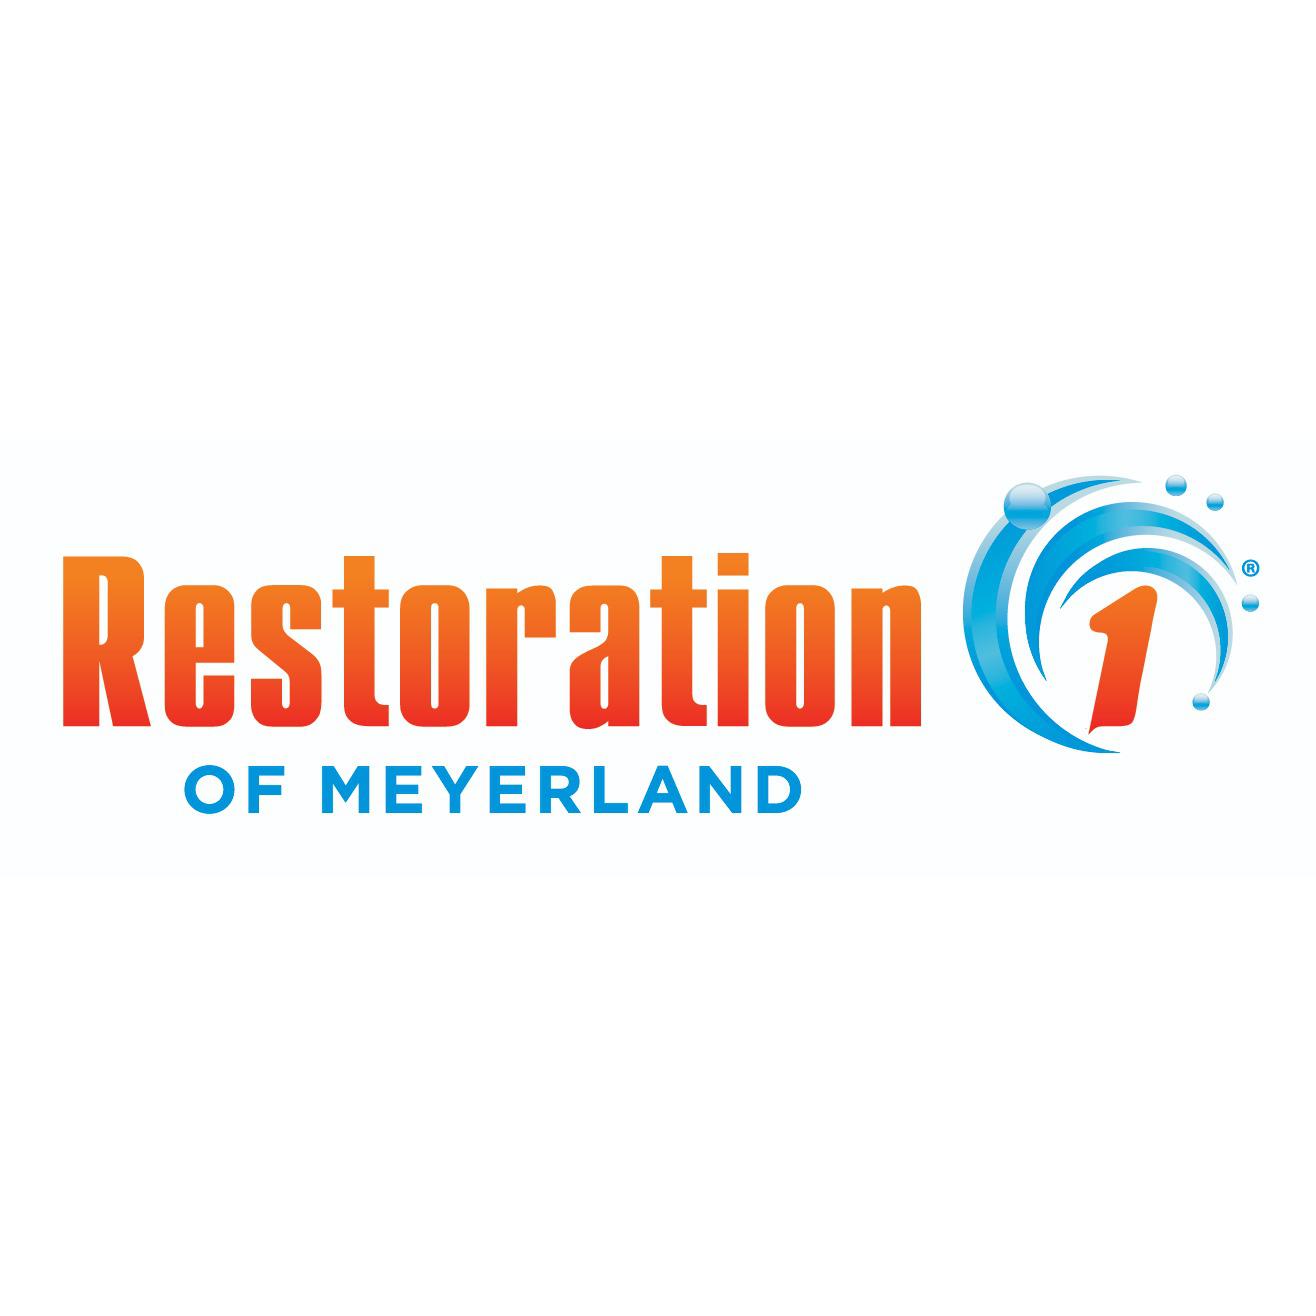 Restoration 1 of Meyerland